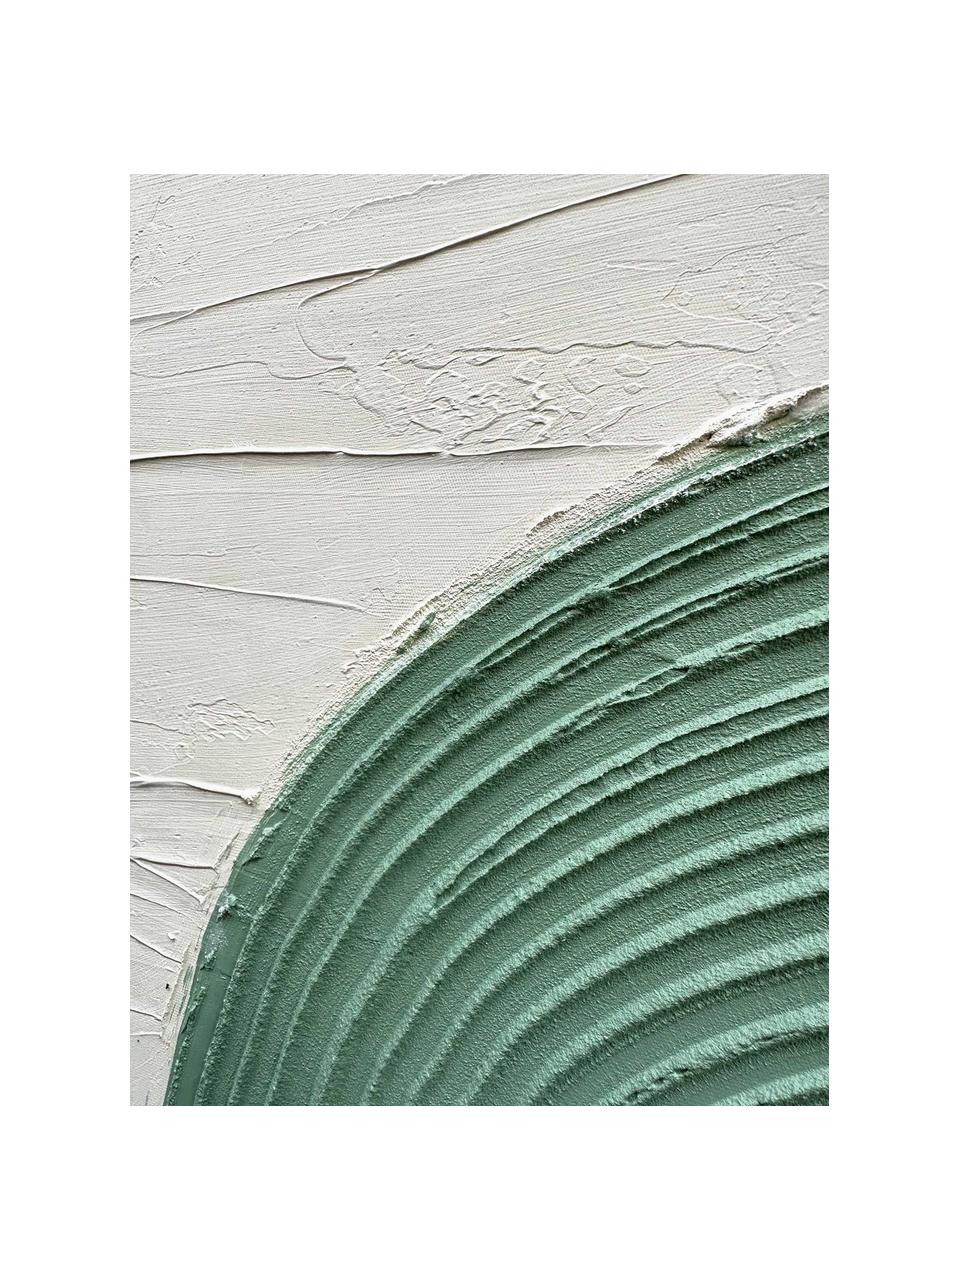 Tela dipinta a mano Green Curves, Tonalità verdi, bianco, Larg. 80 x Alt. 100 cm